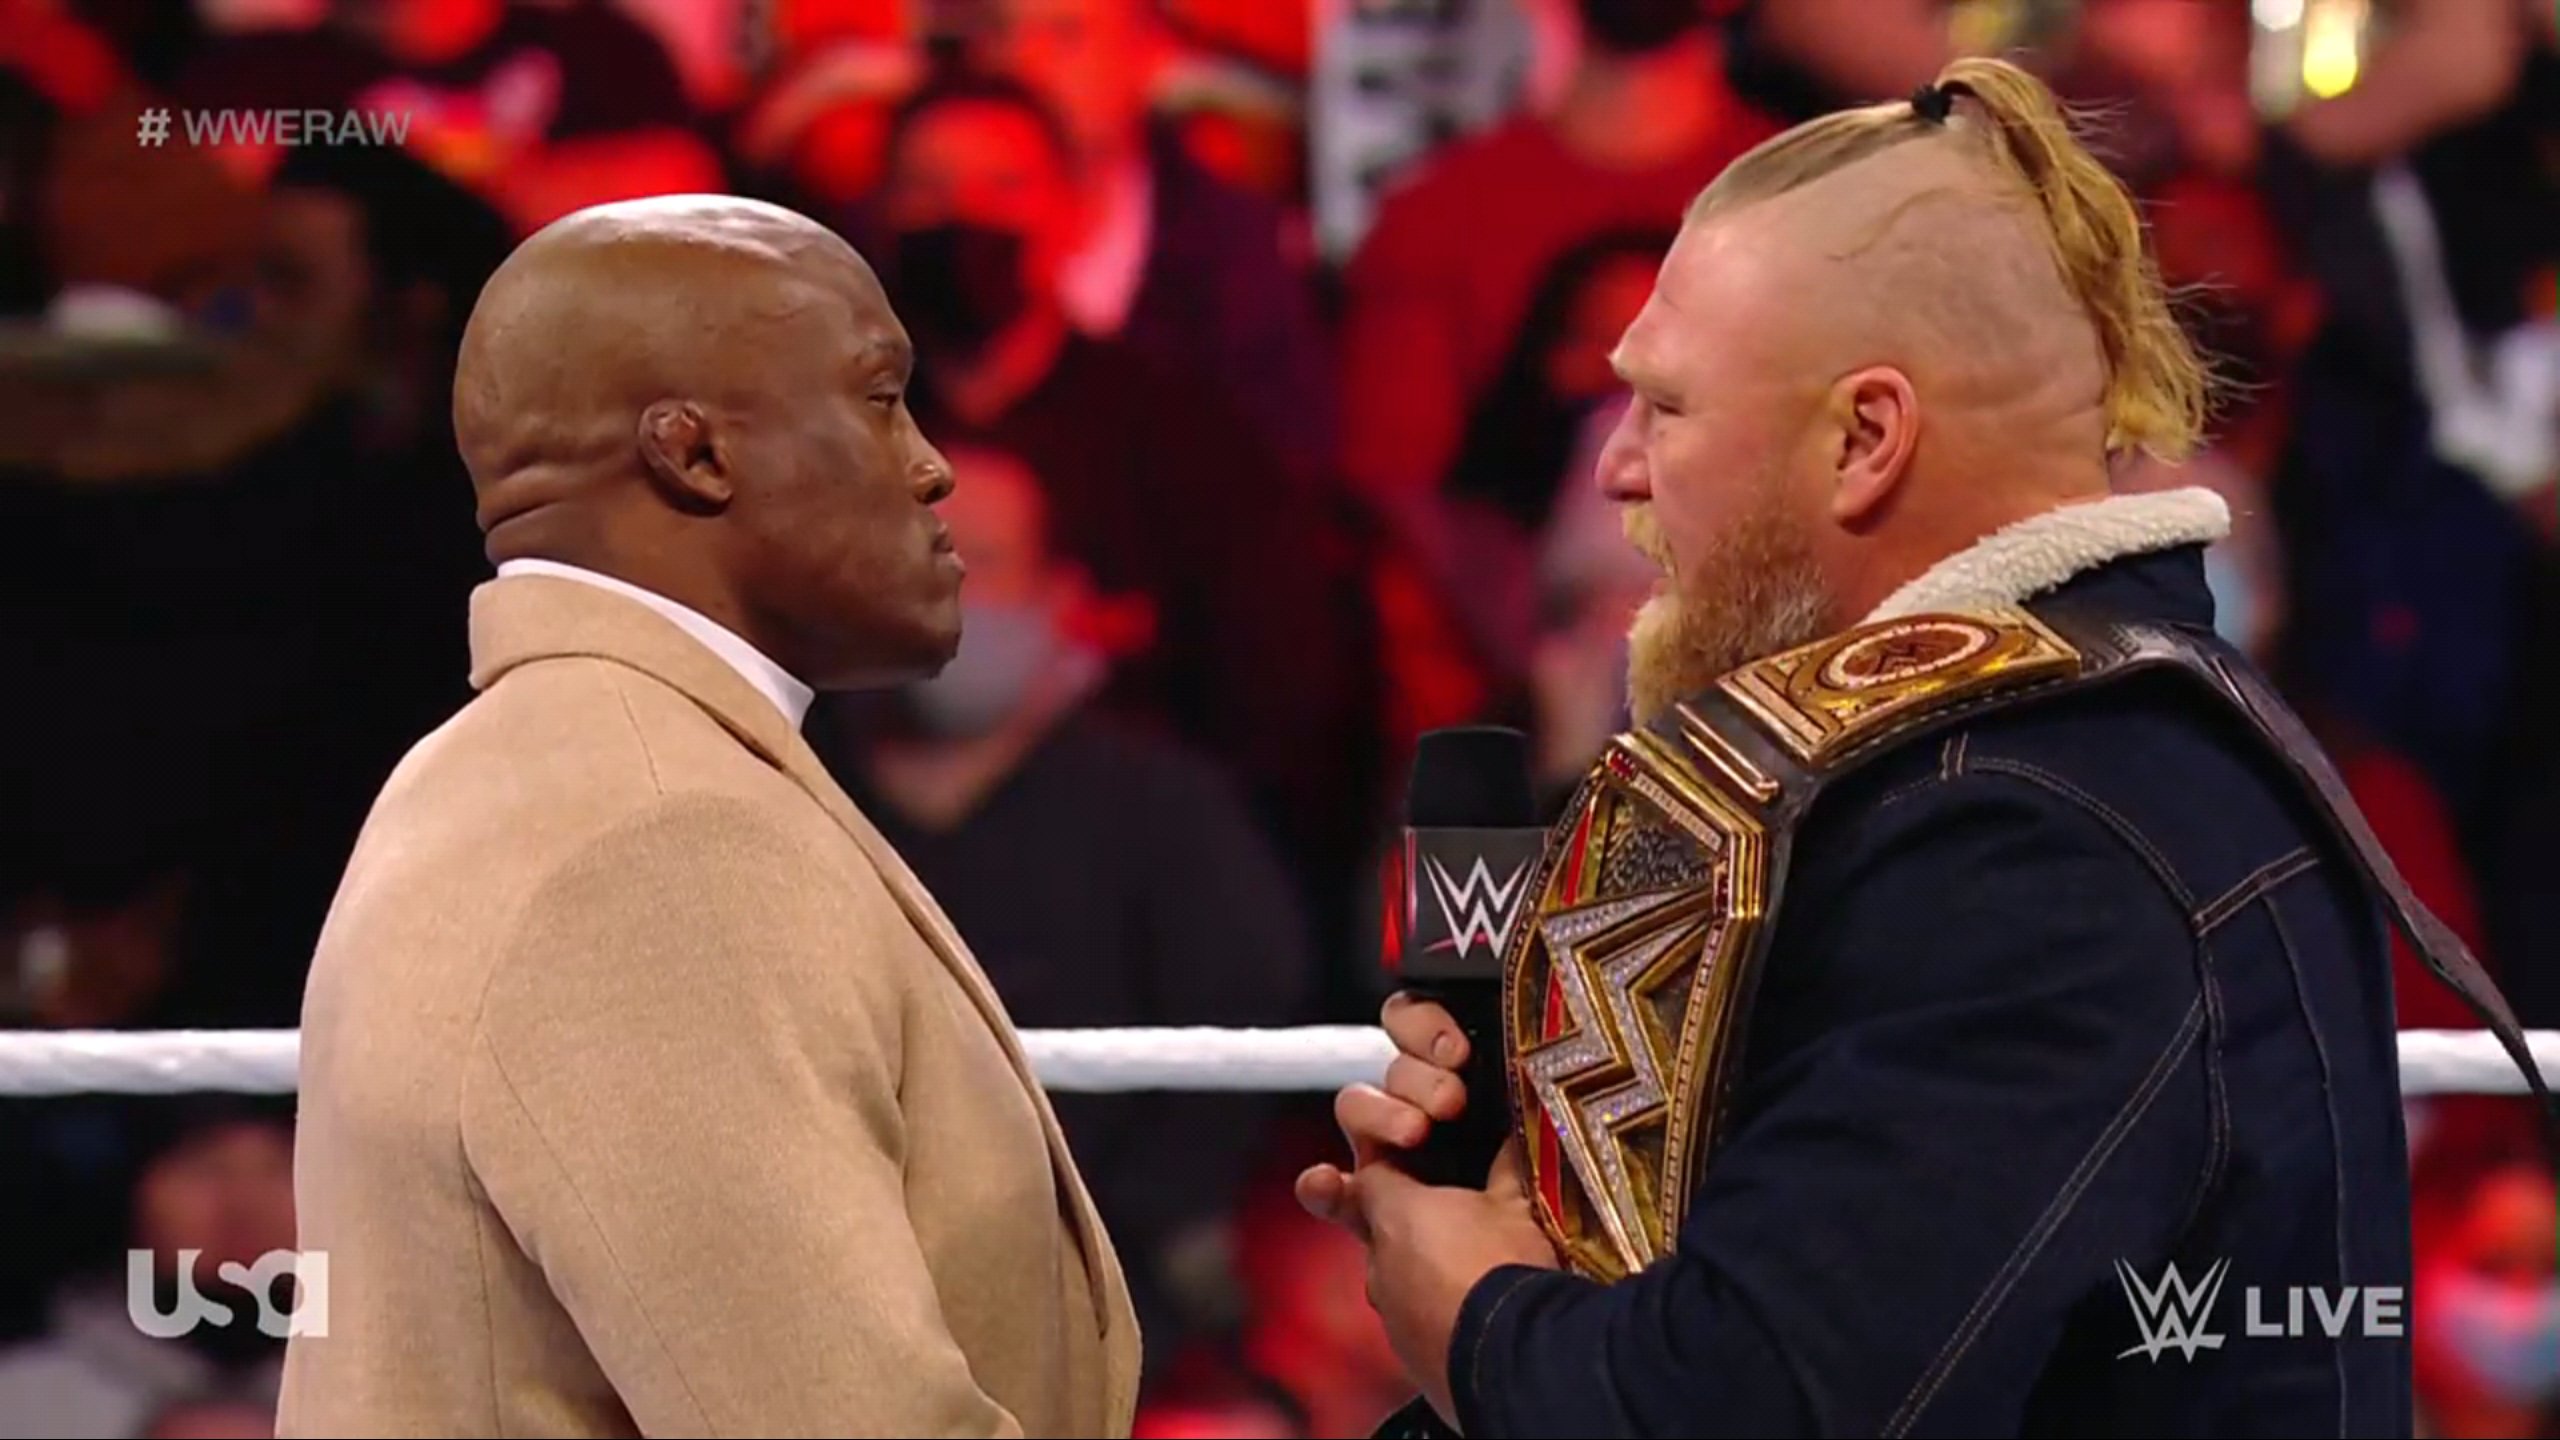 WWE Raw rating drops despite confrontation between Lesnar and Lashley